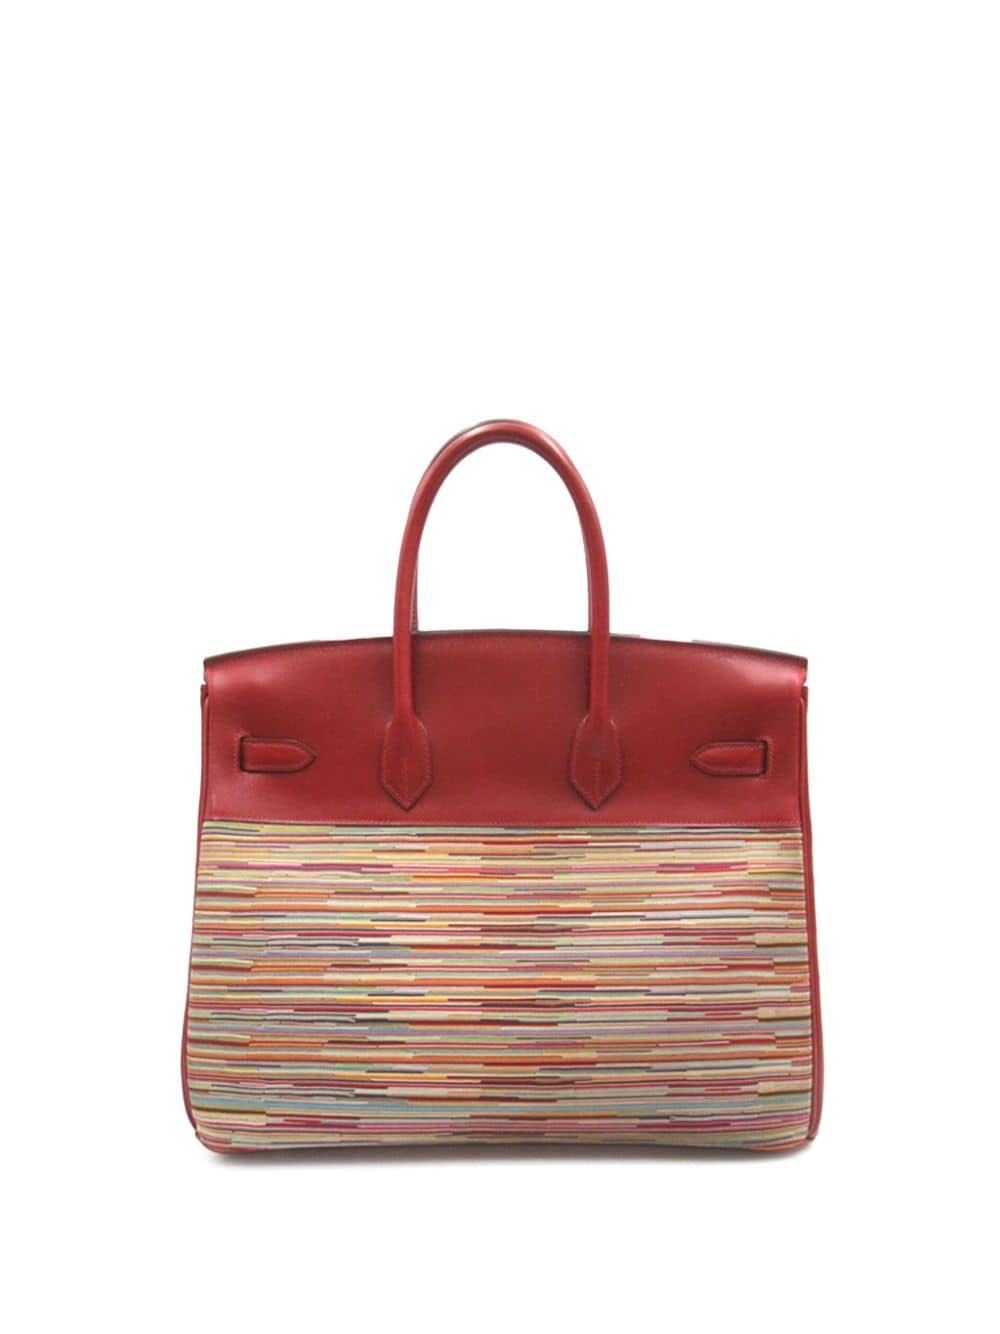 Hermès Pre-Owned 2002 Box Calf Vibrato Suede Birkin Retourne 35 handbag - Veelkleurig